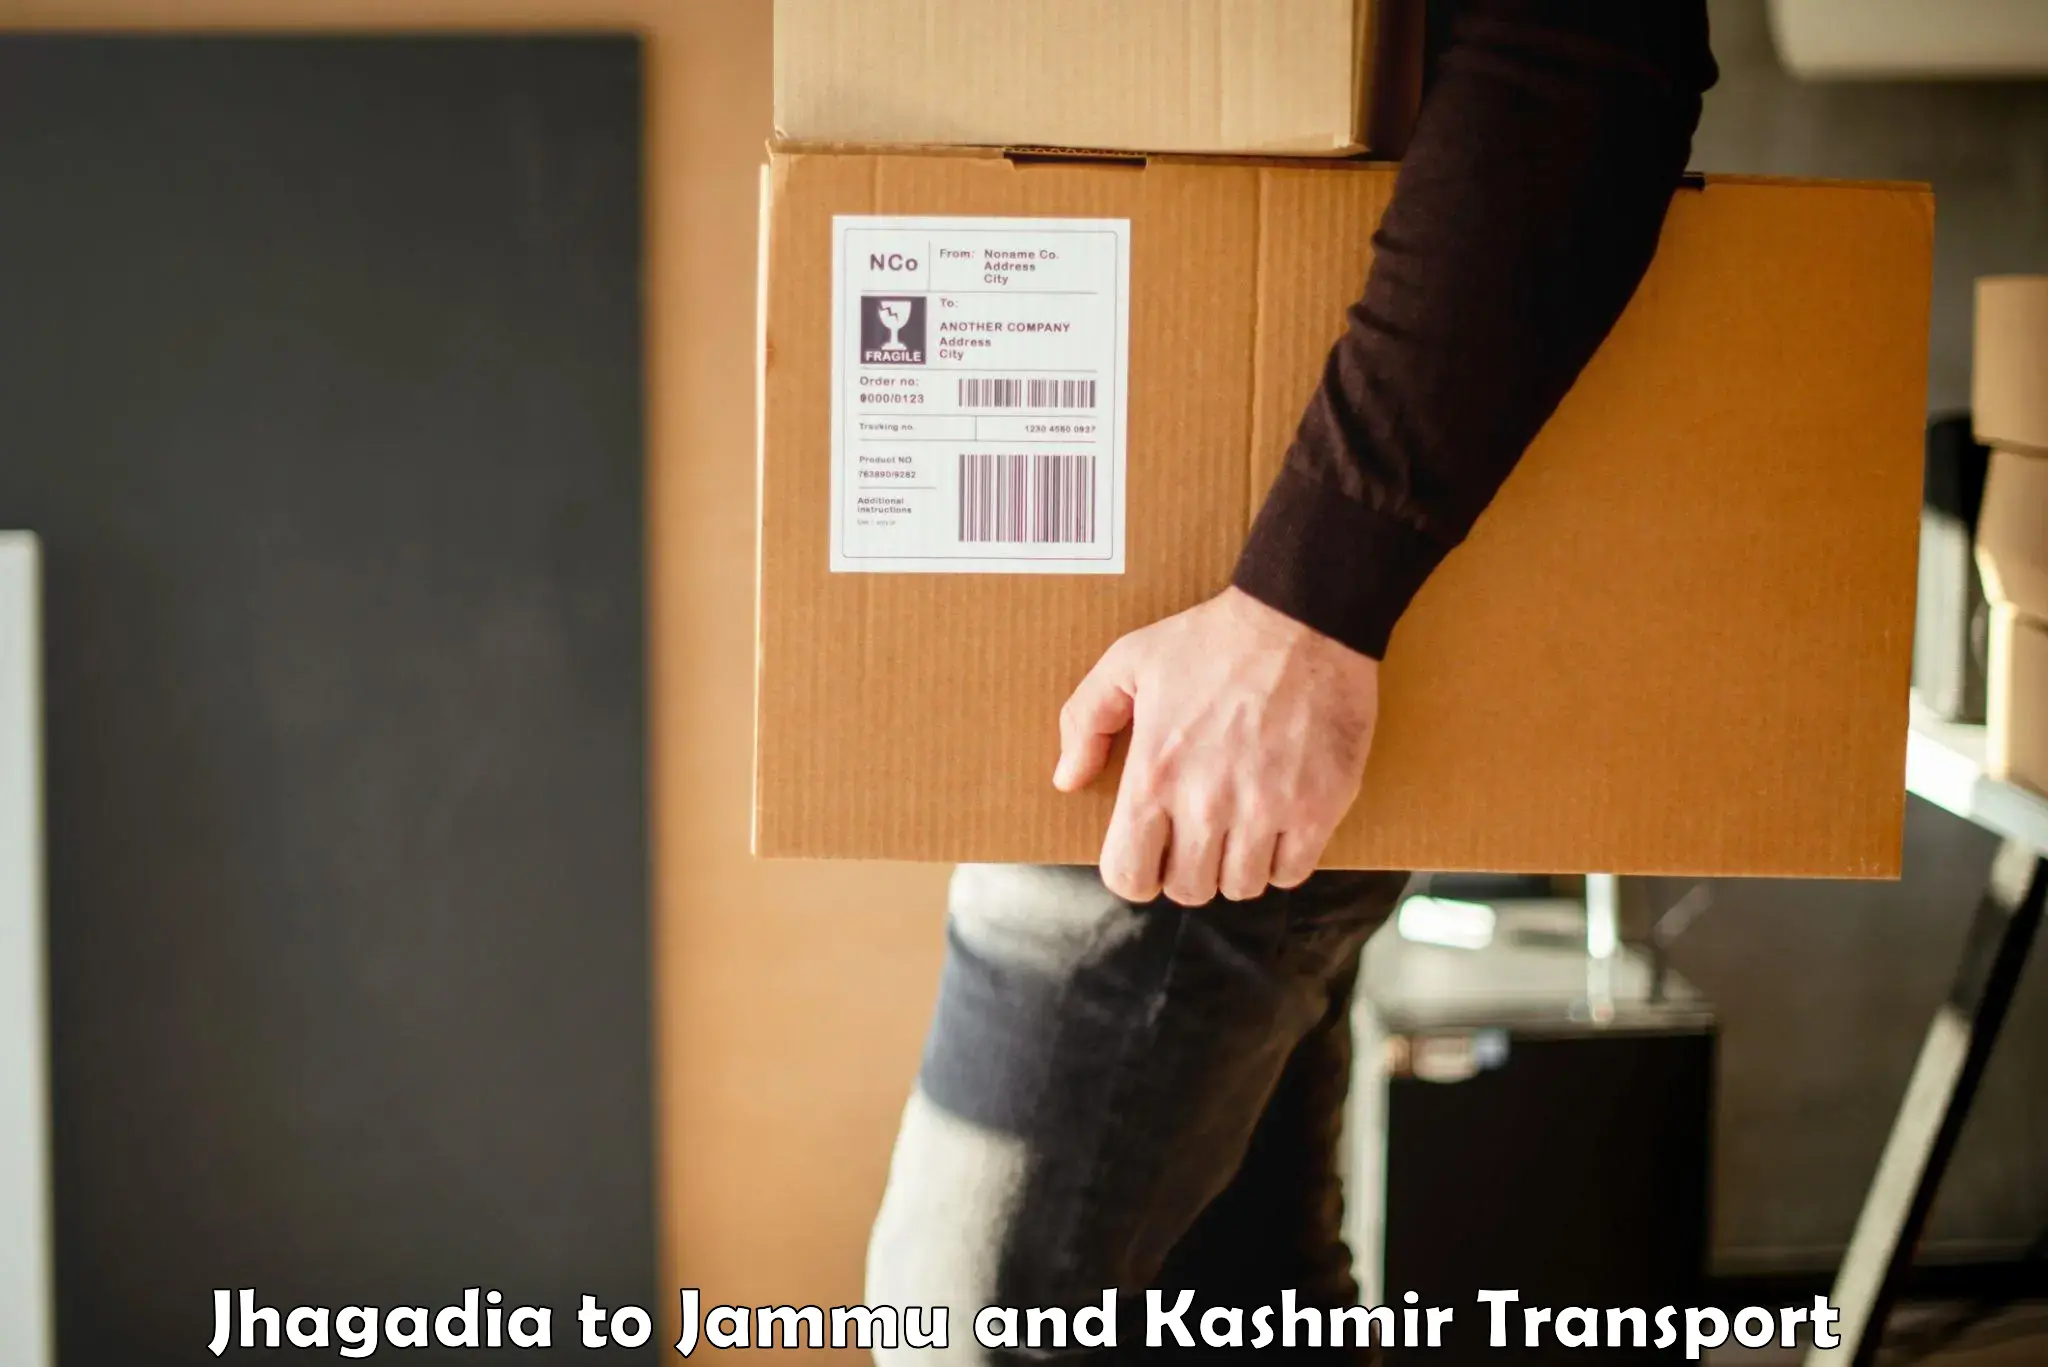 Truck transport companies in India Jhagadia to Srinagar Kashmir